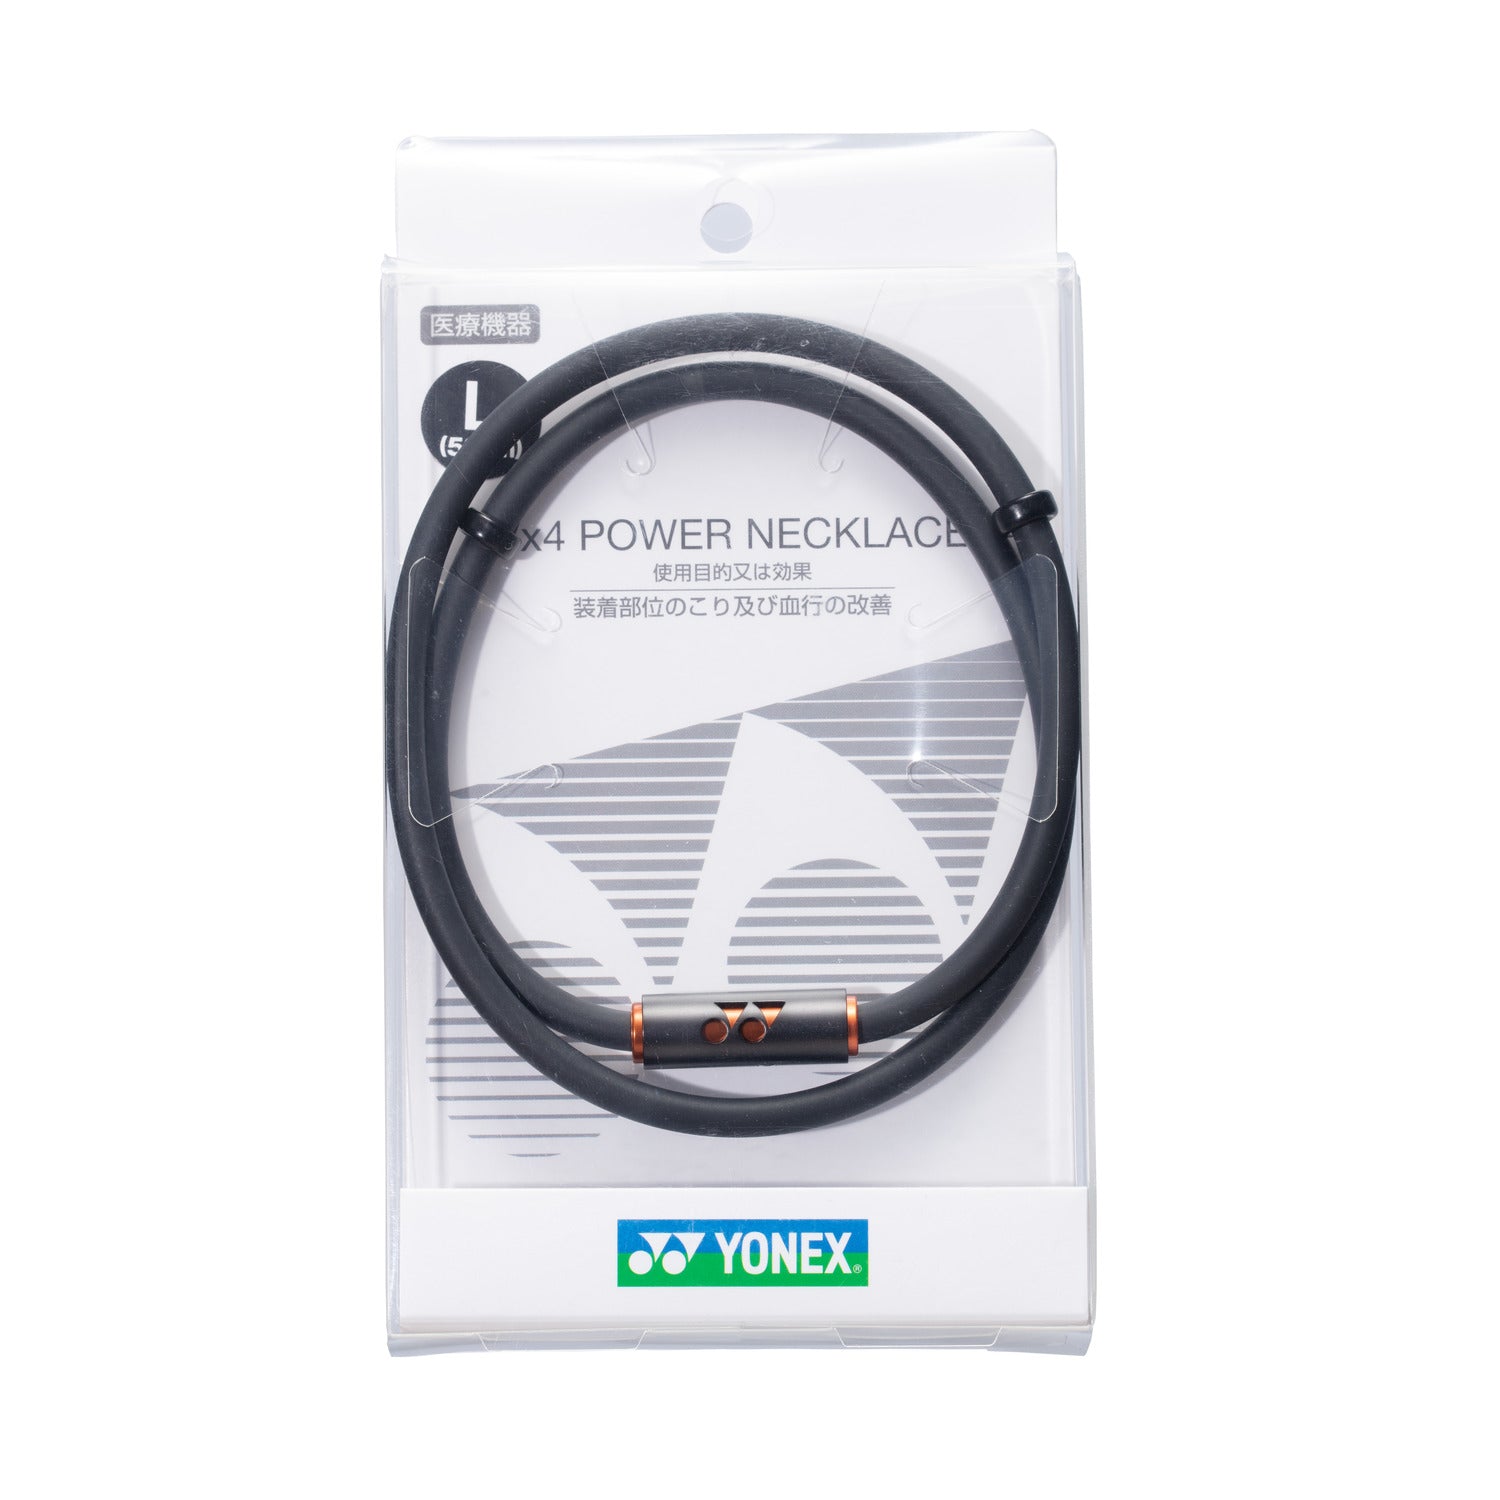 Yonex V4 power necklace. YOX00020 - Black / Orange / S